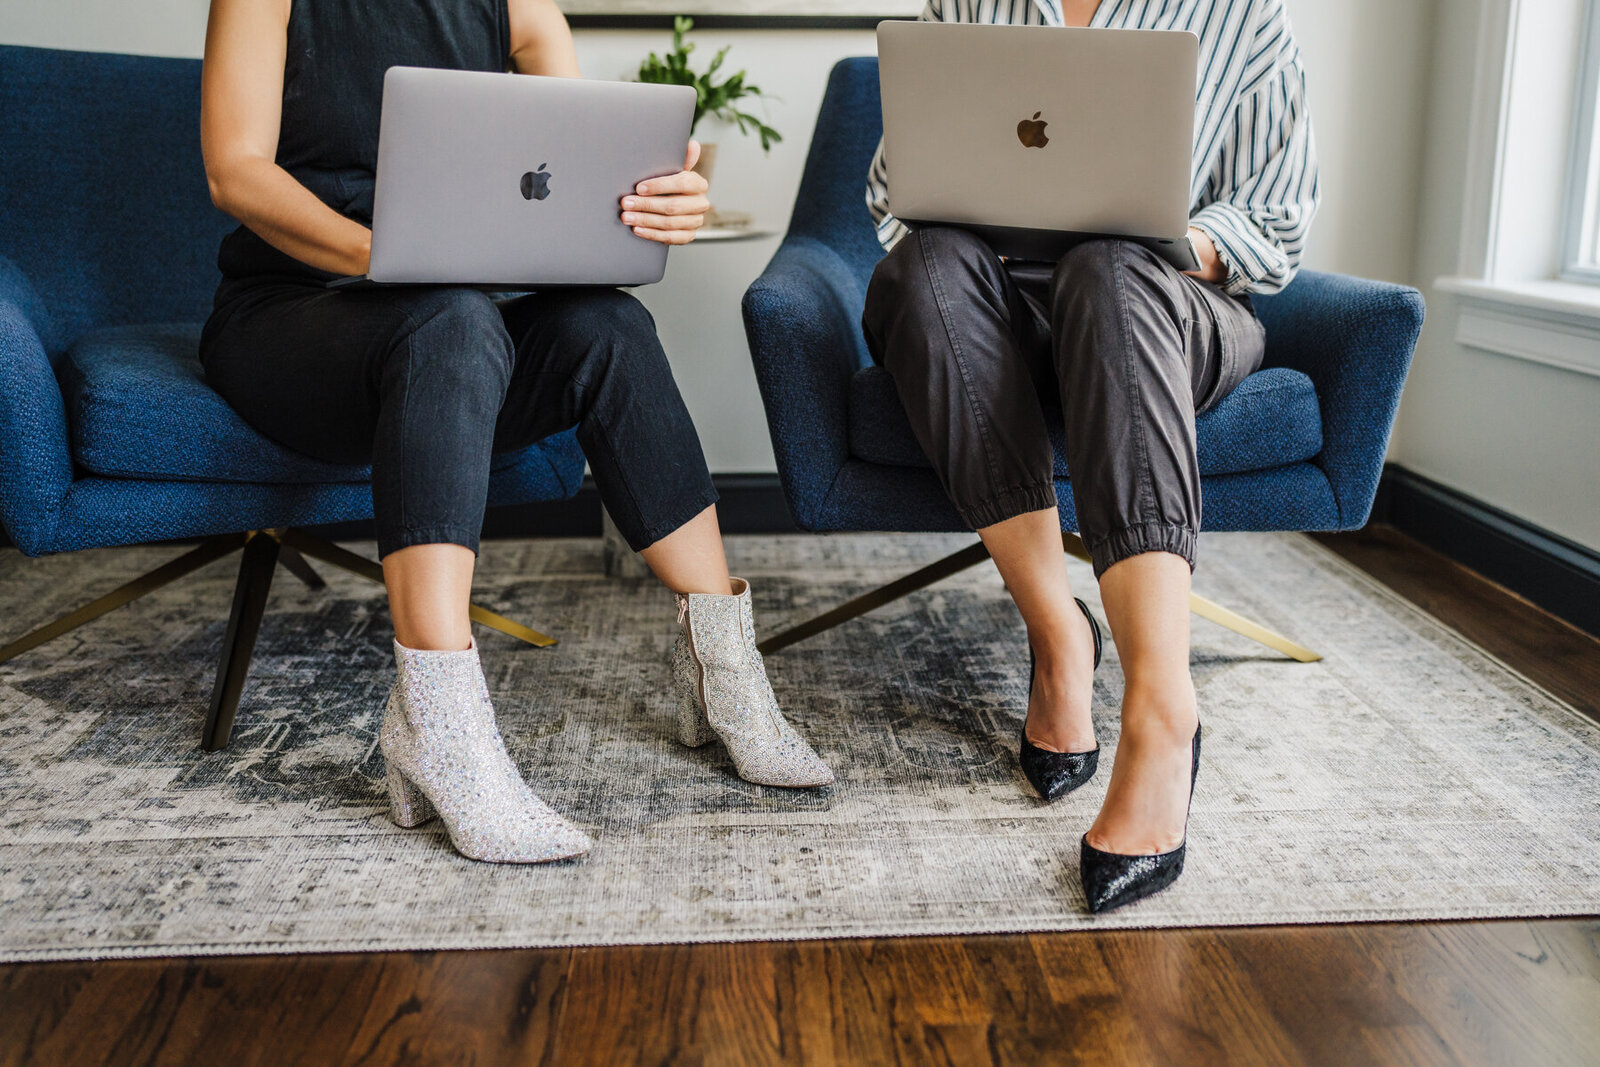 shot of the feet of two women in heels working on laptops